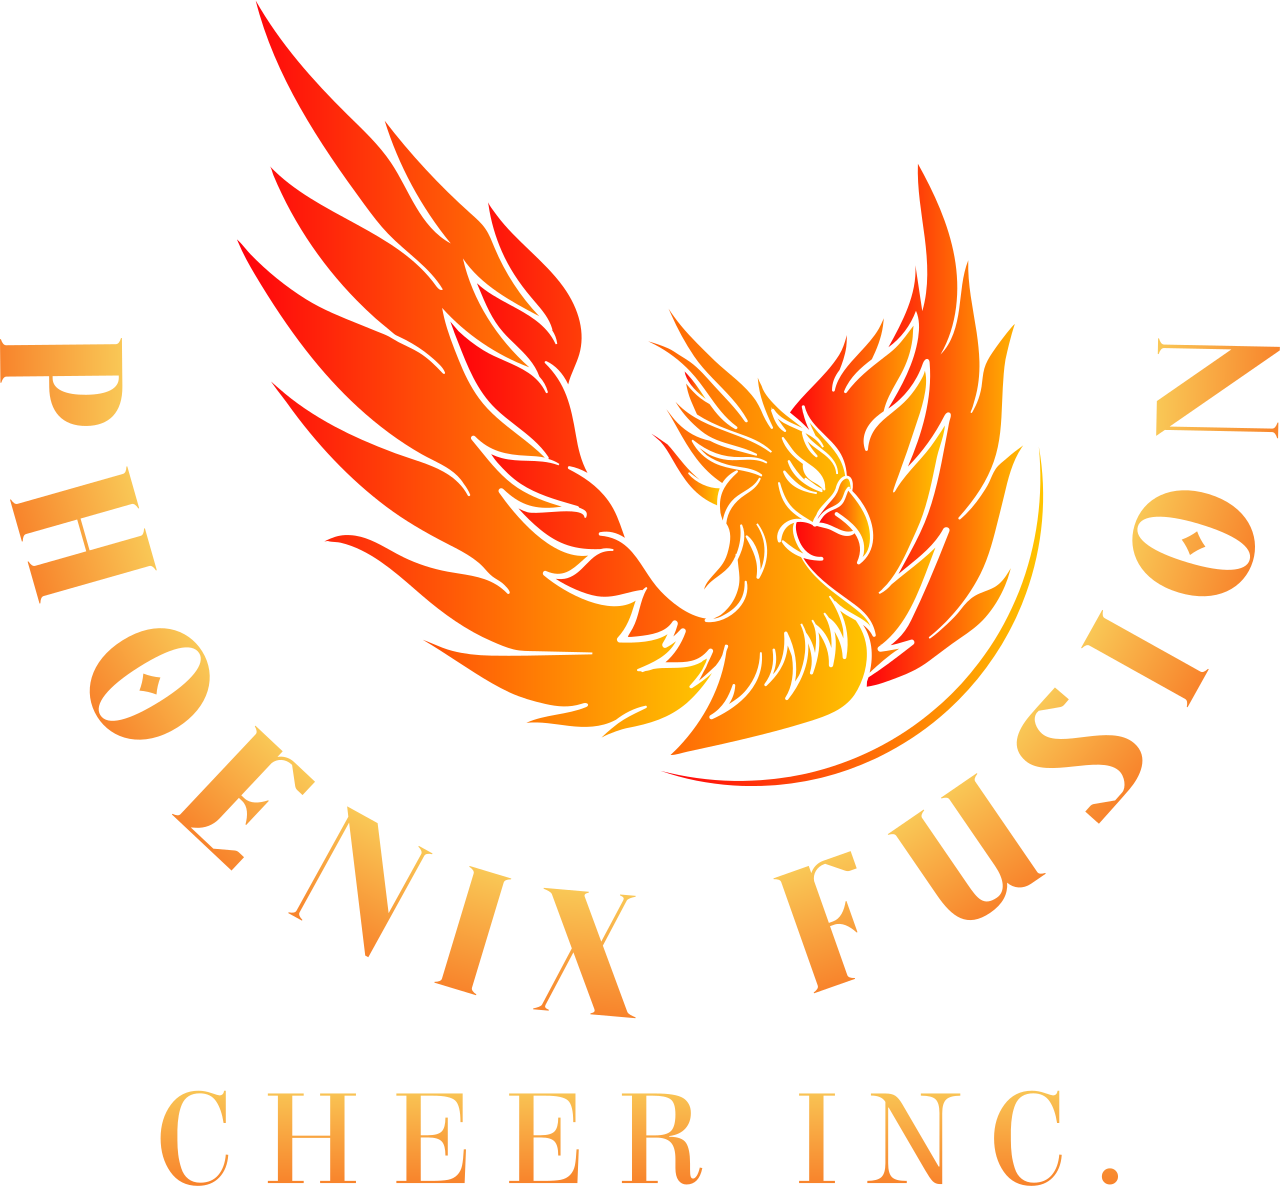 PHOENIX FUSION's web page